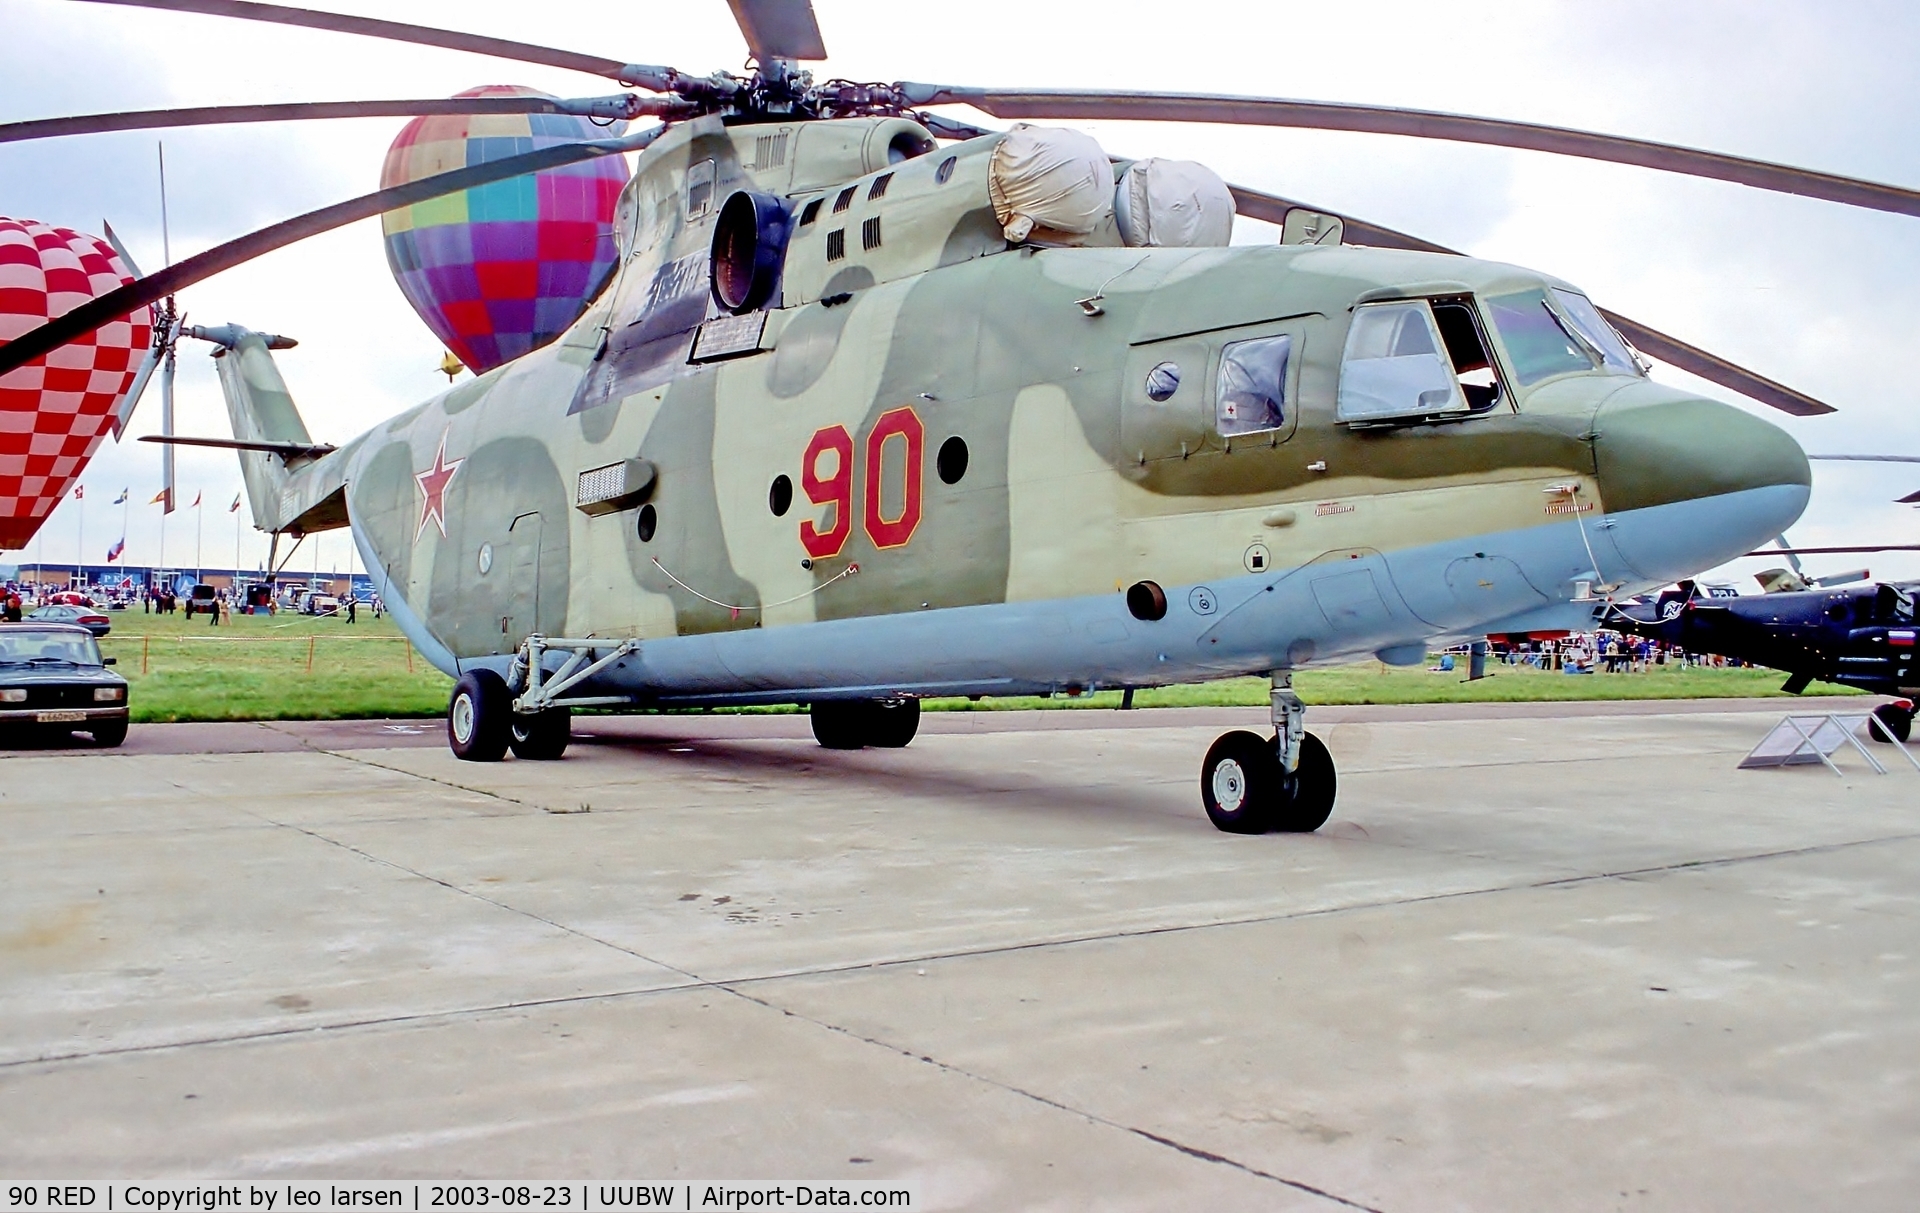 90 RED, 1992 Mil Mi-26 C/N 34001212500, Zhukovsky Moscow 23.8.03